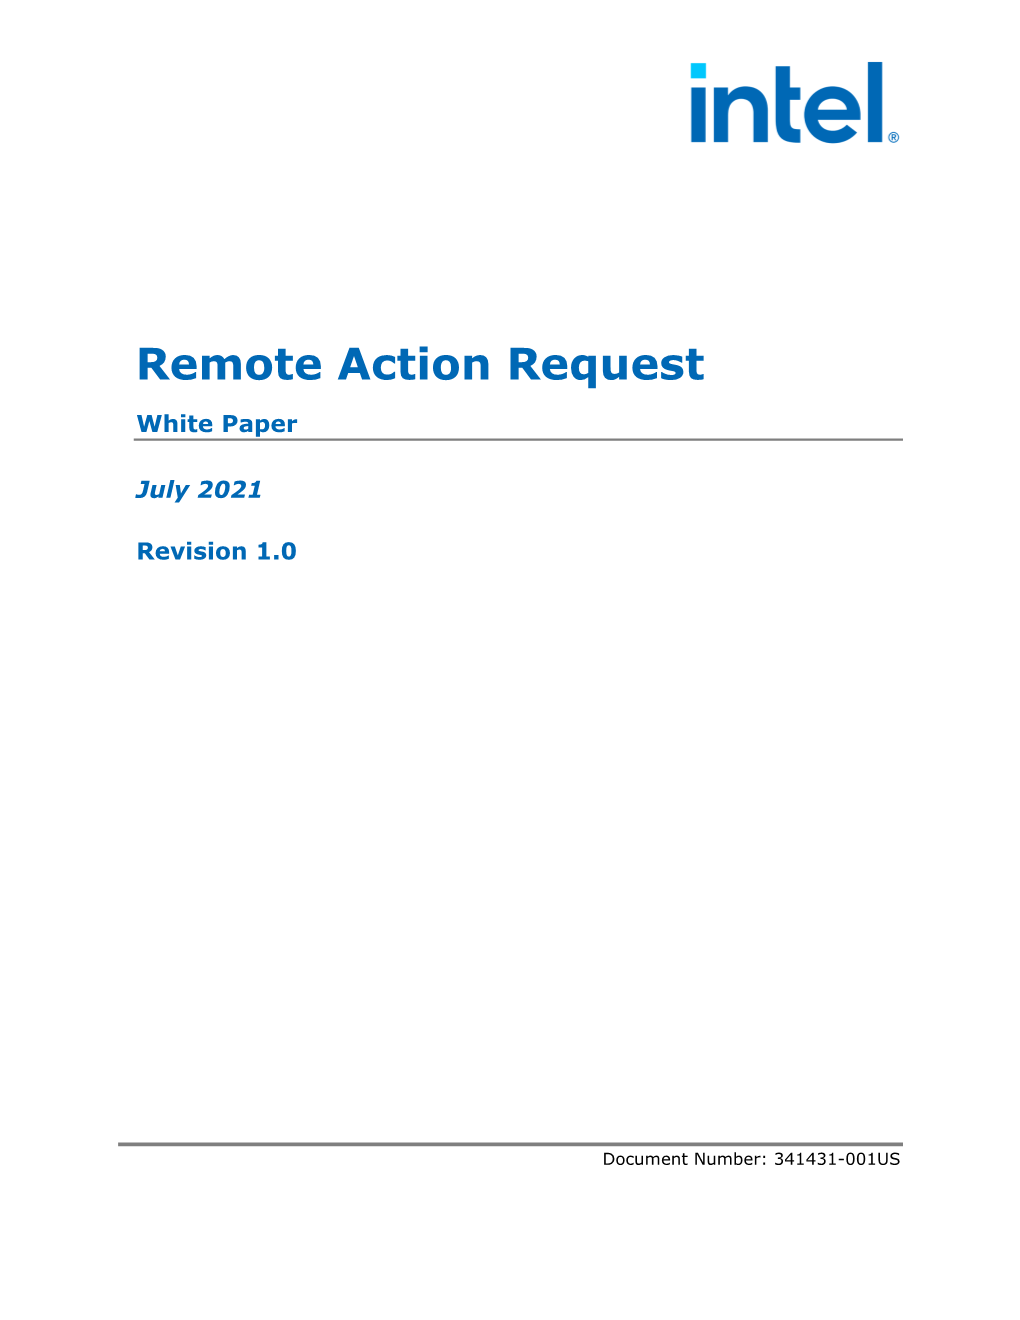 Remote Action Request White Paper